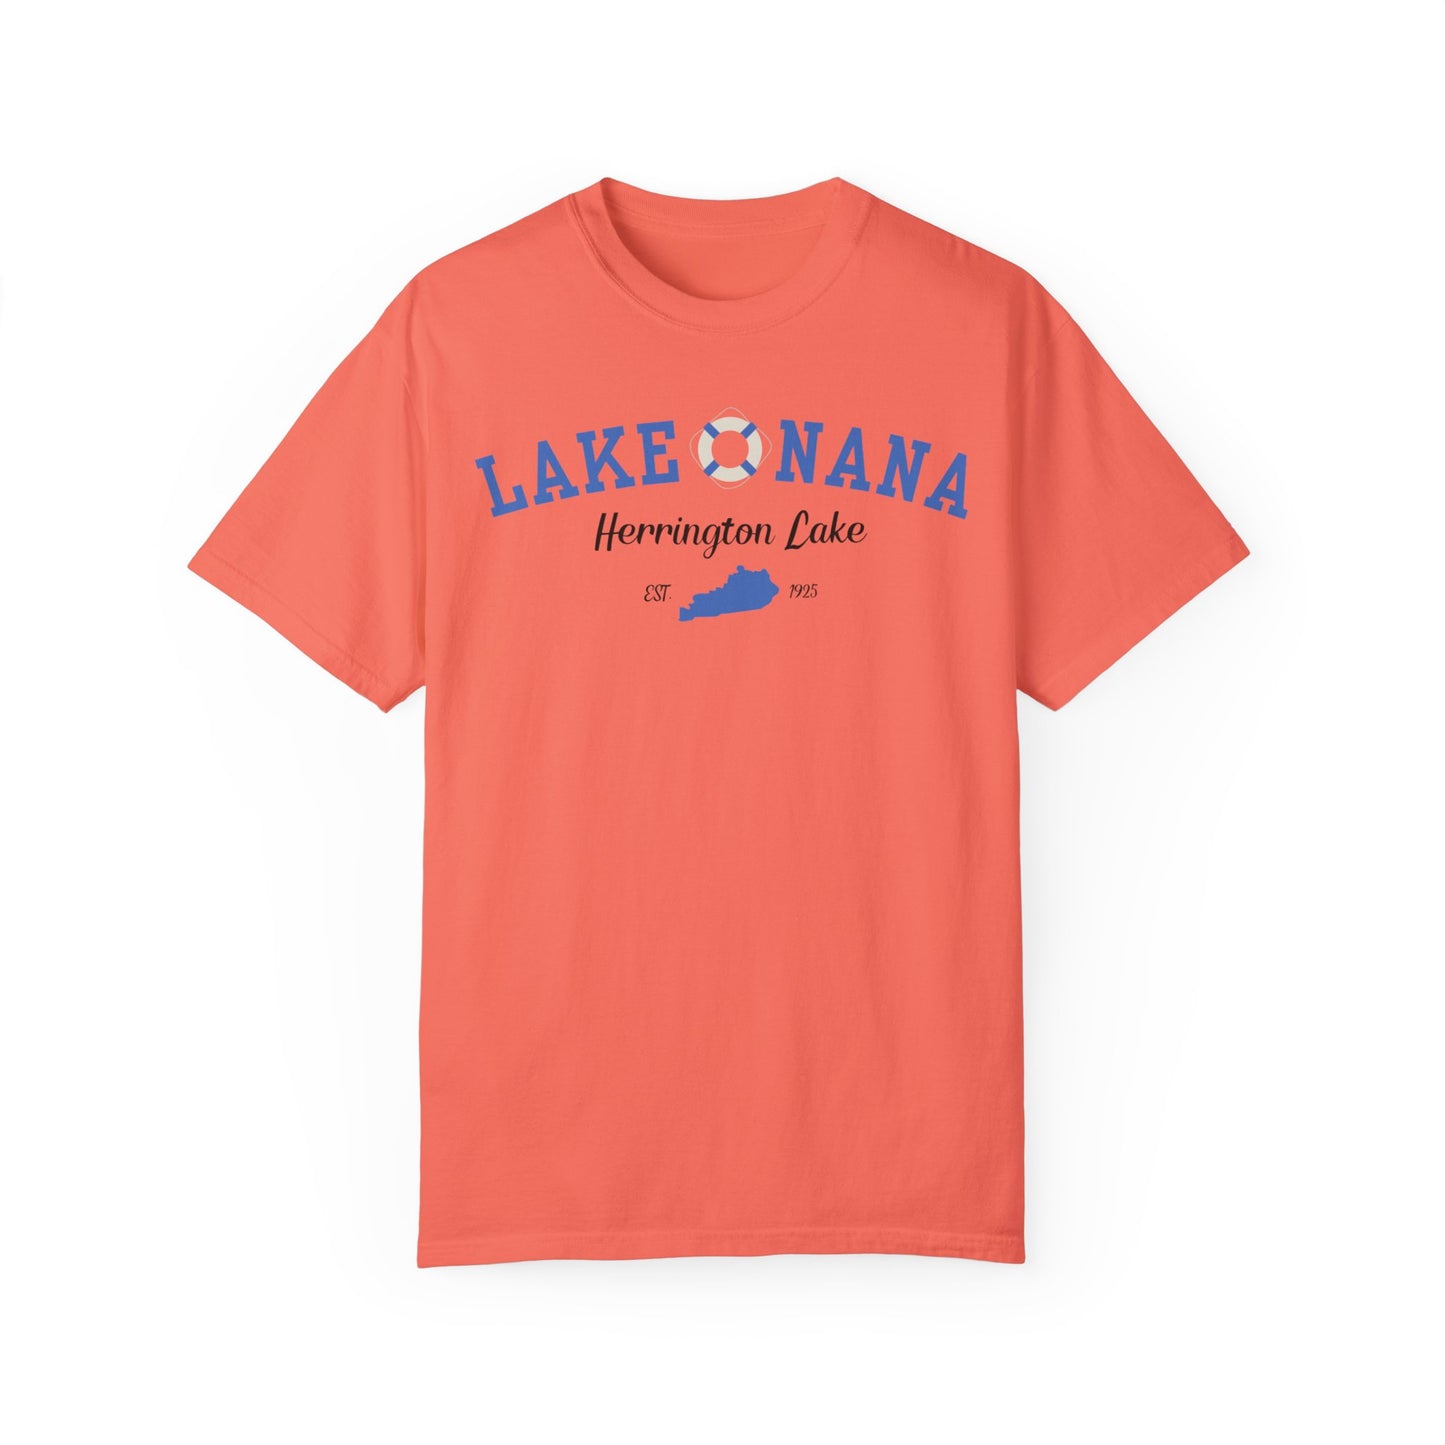 "Lake Nana" Premium Garment-Dyed Comfort Colors TShirt